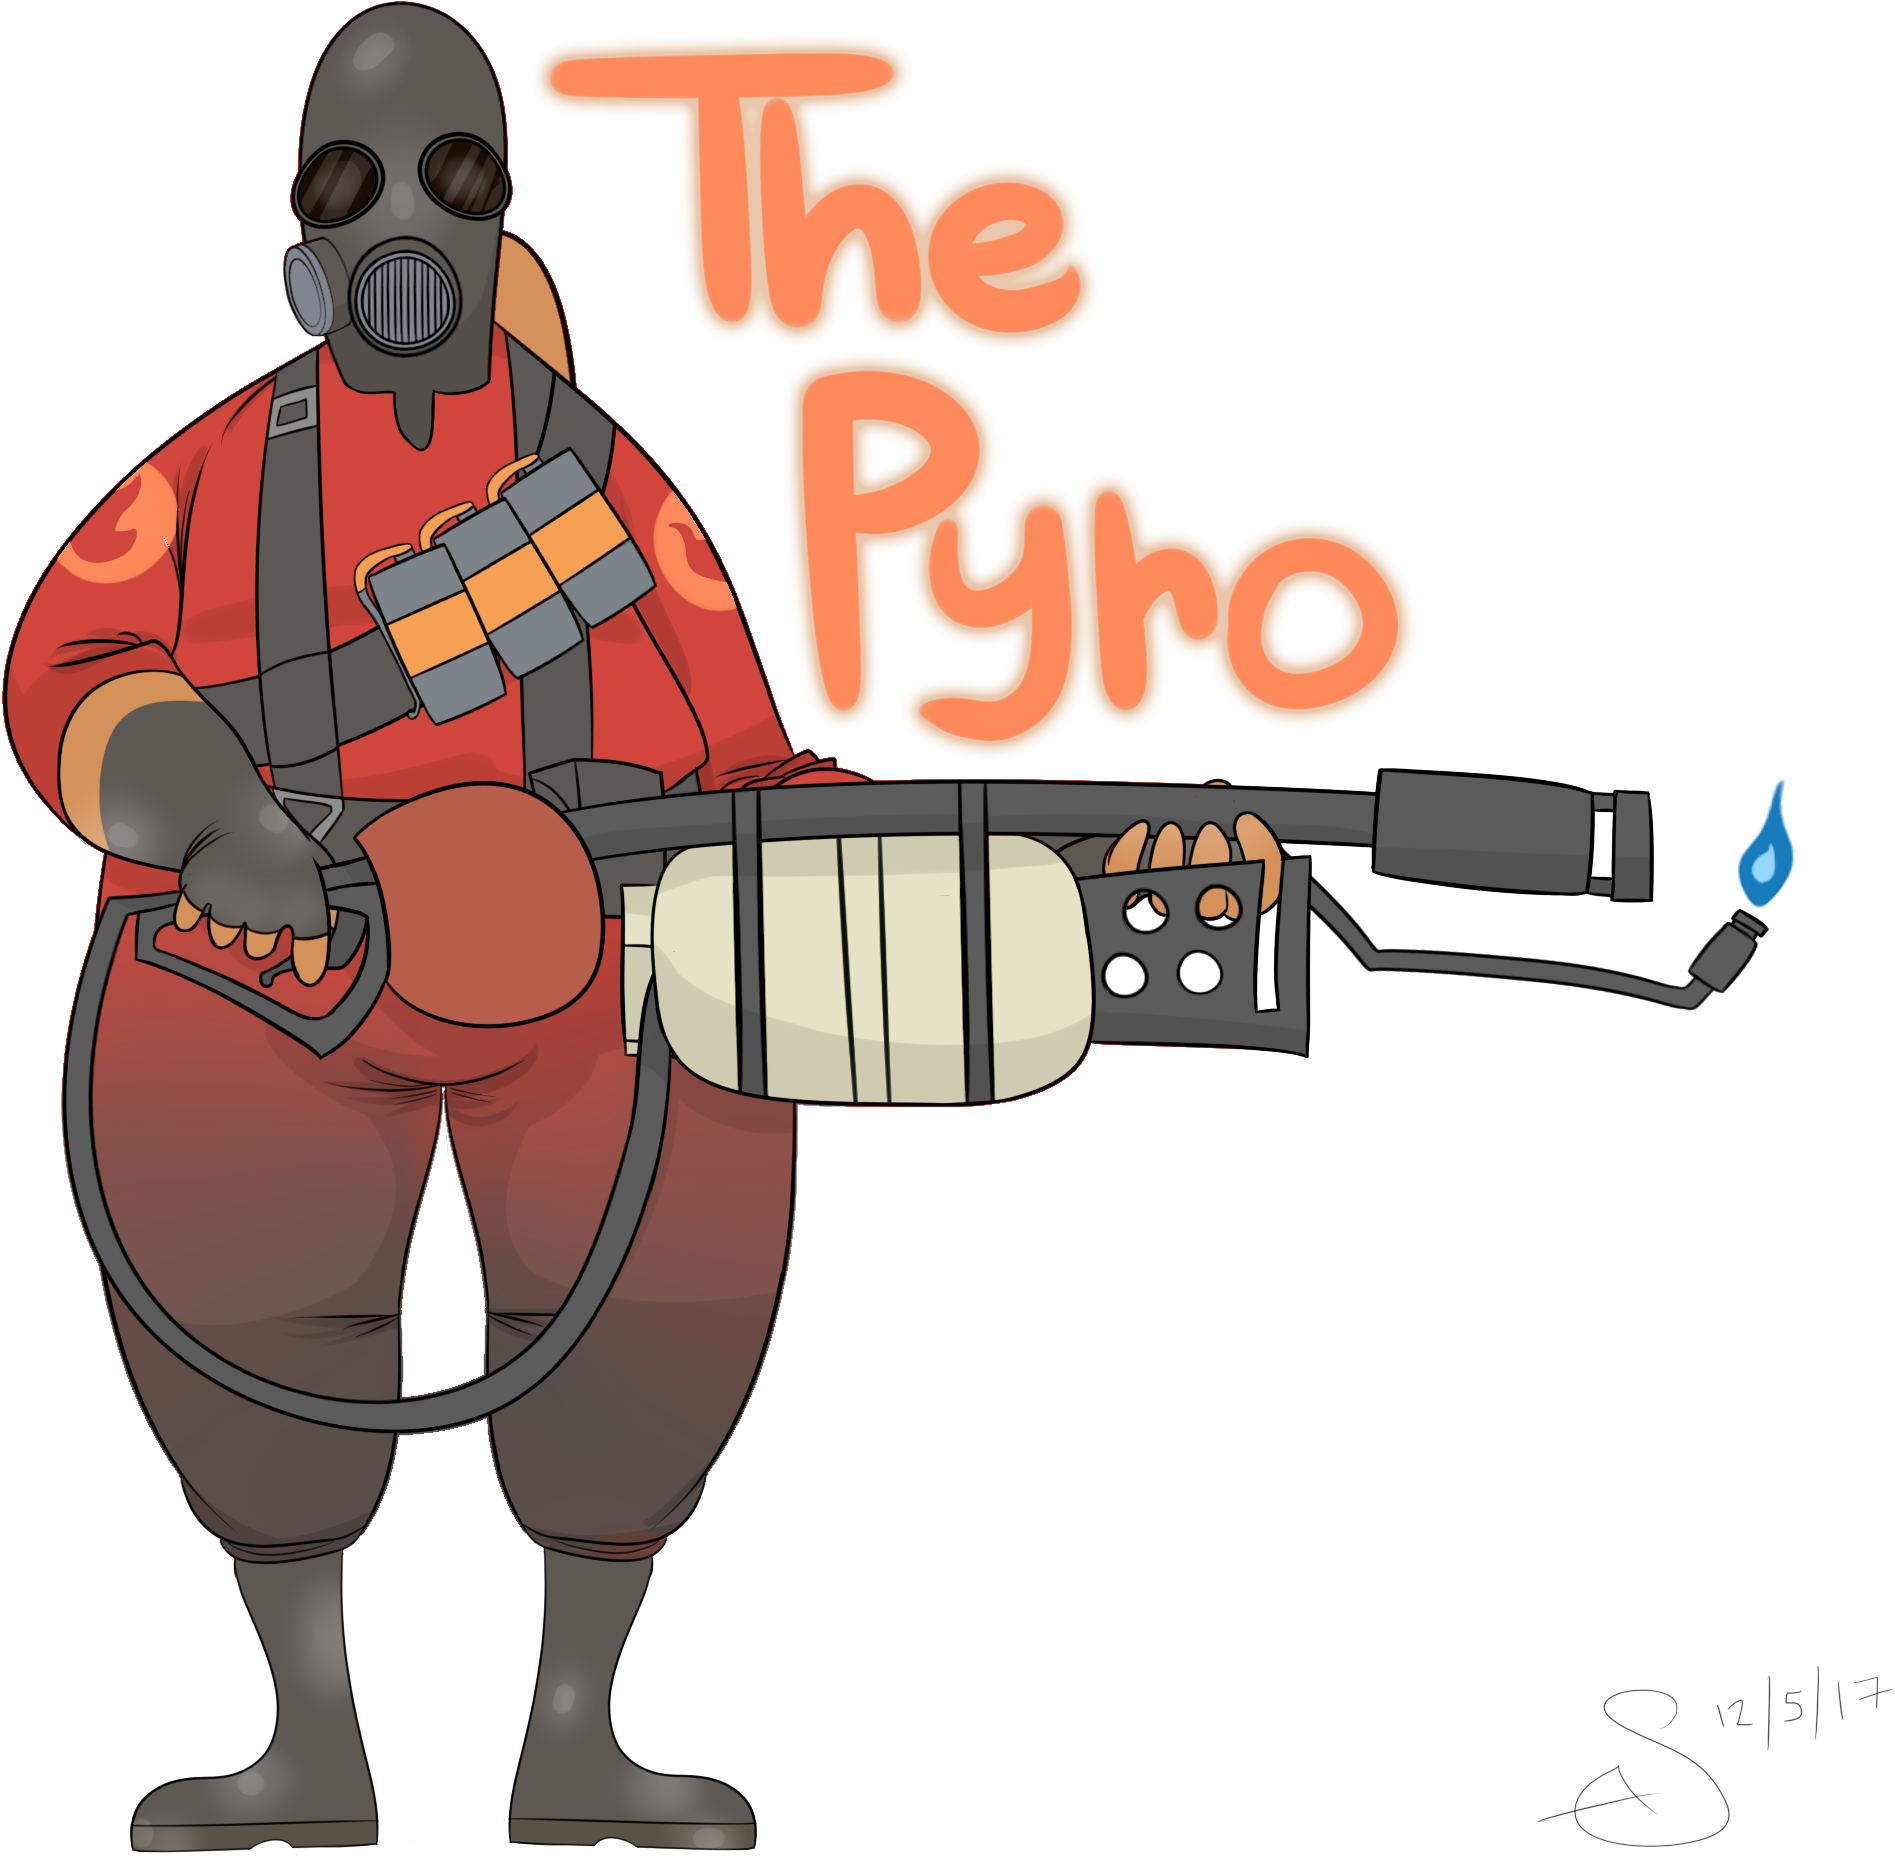 A Cartoon Of A Man In A Gas Mask Holding A Gun